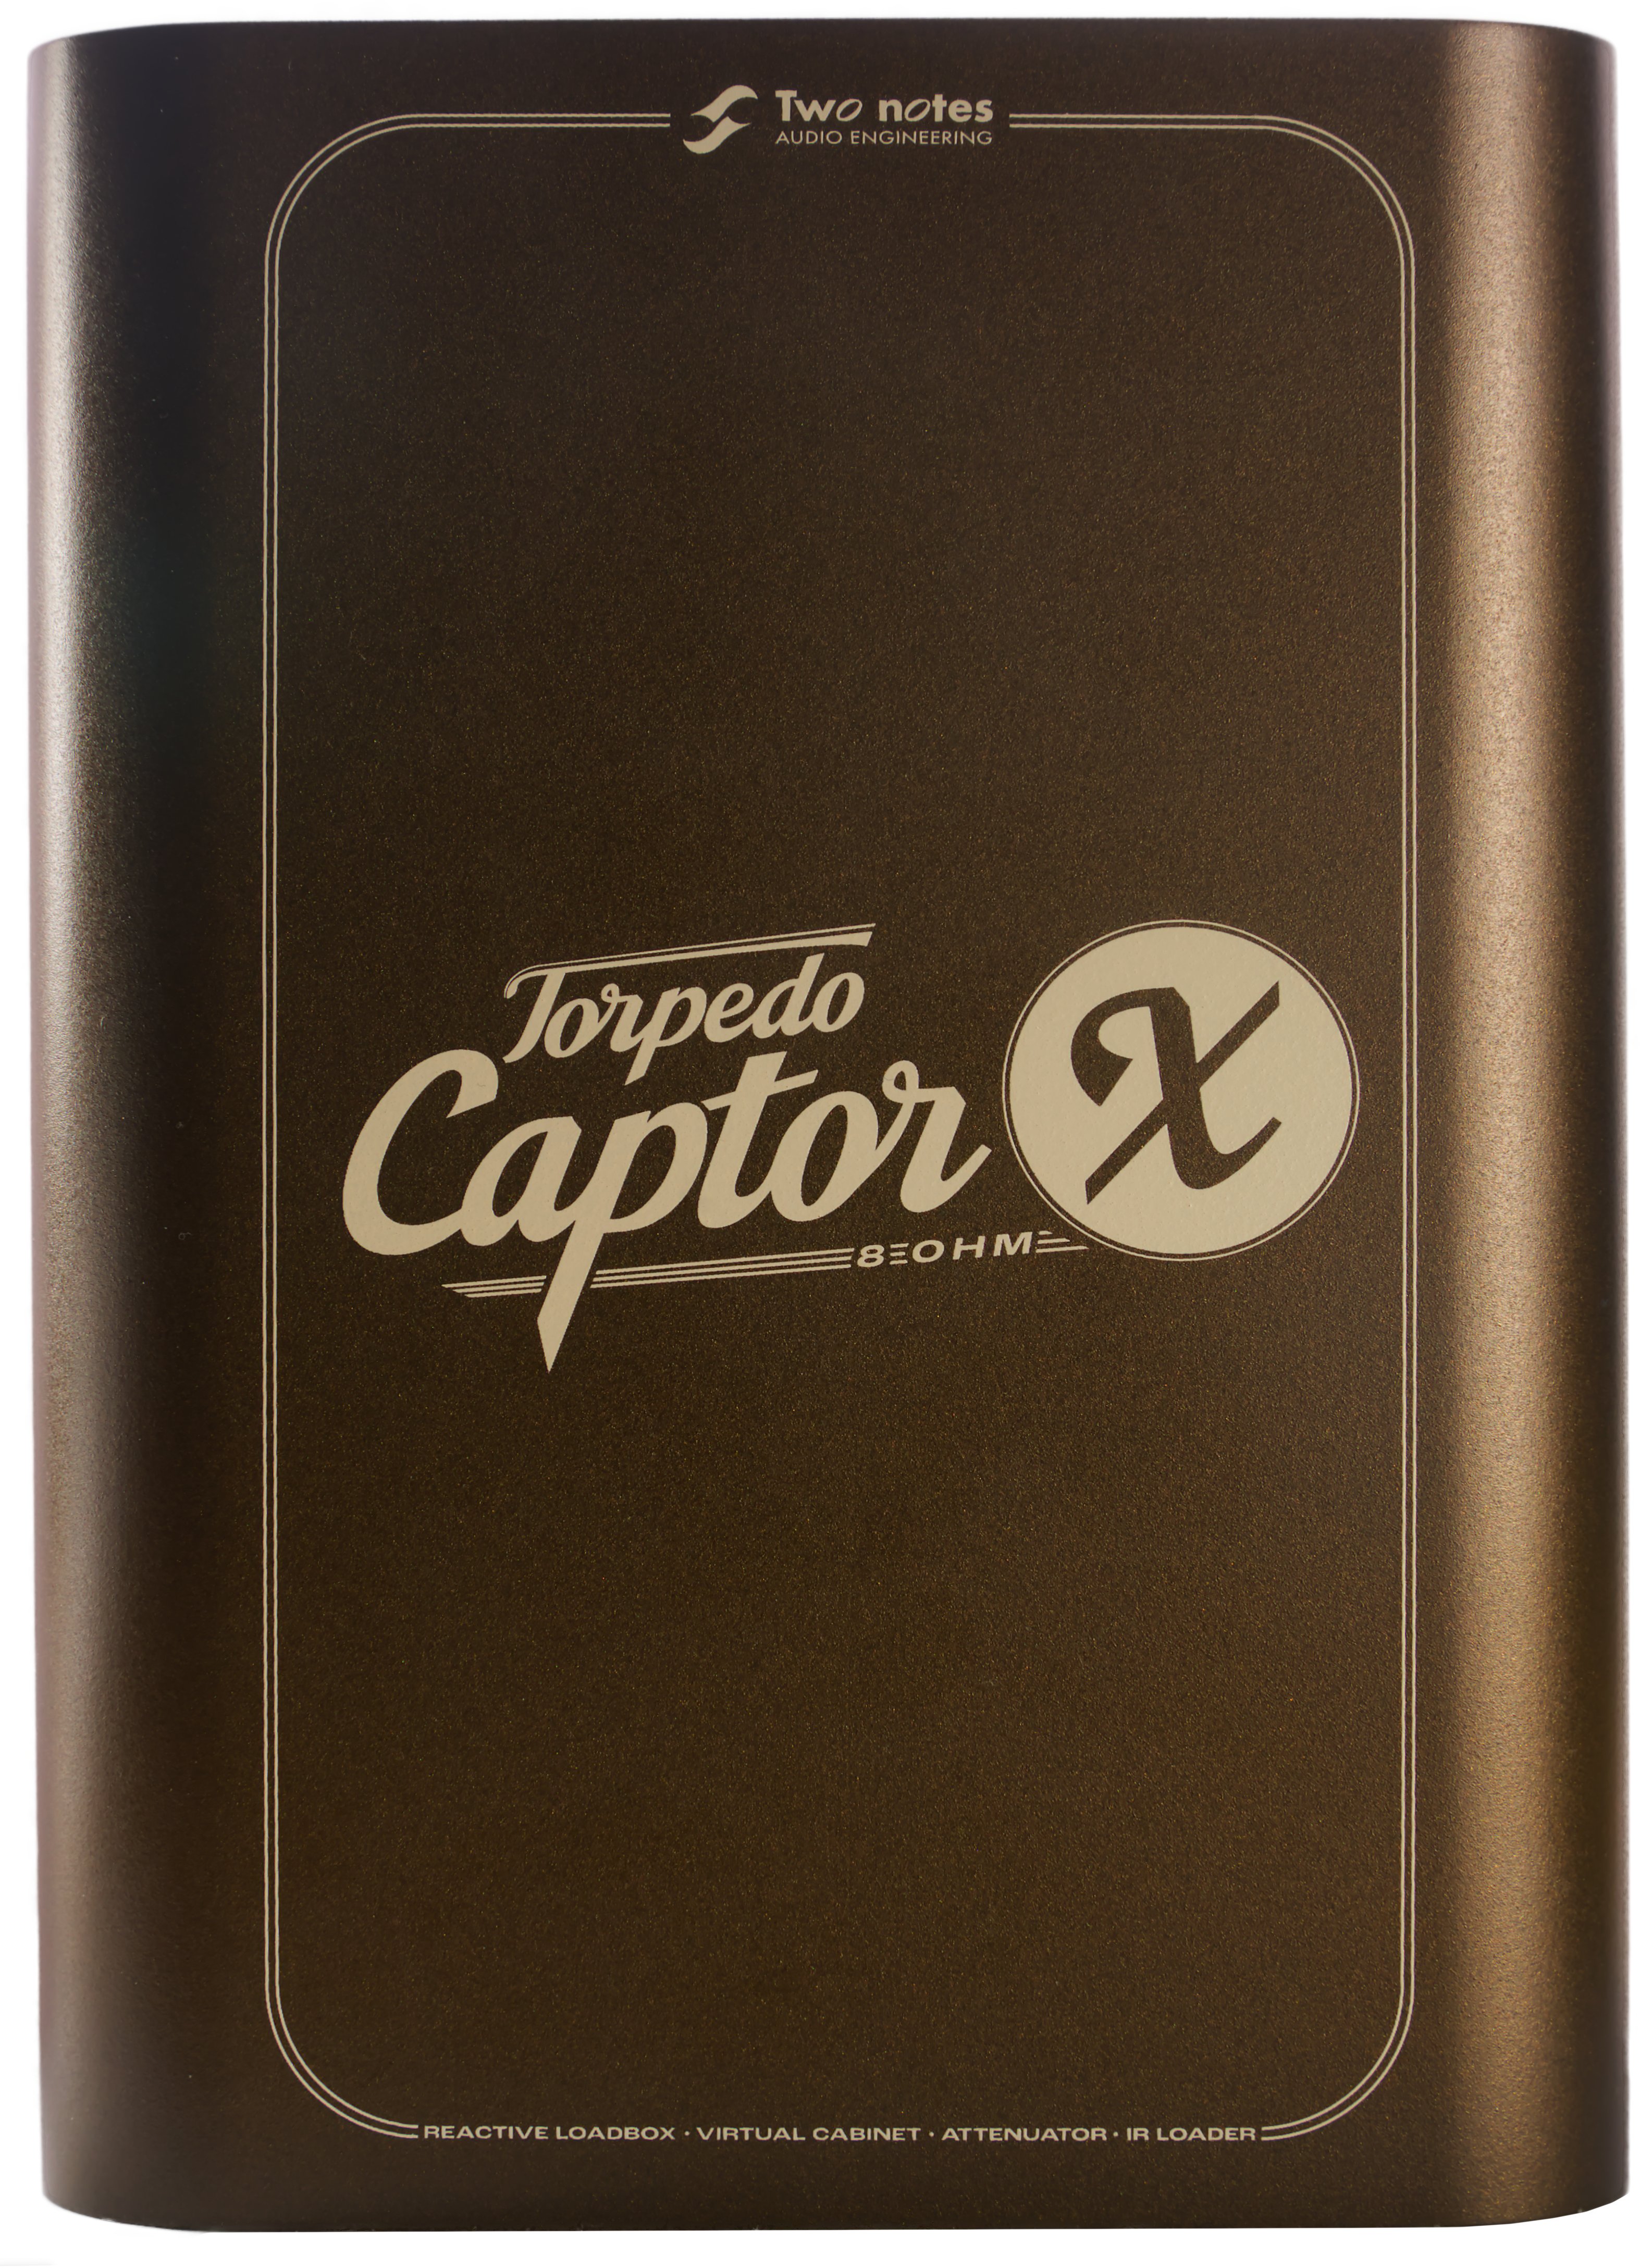 Two Notes Torpedo Captor X Se Limited - Cabinet Simulator - Variation 6